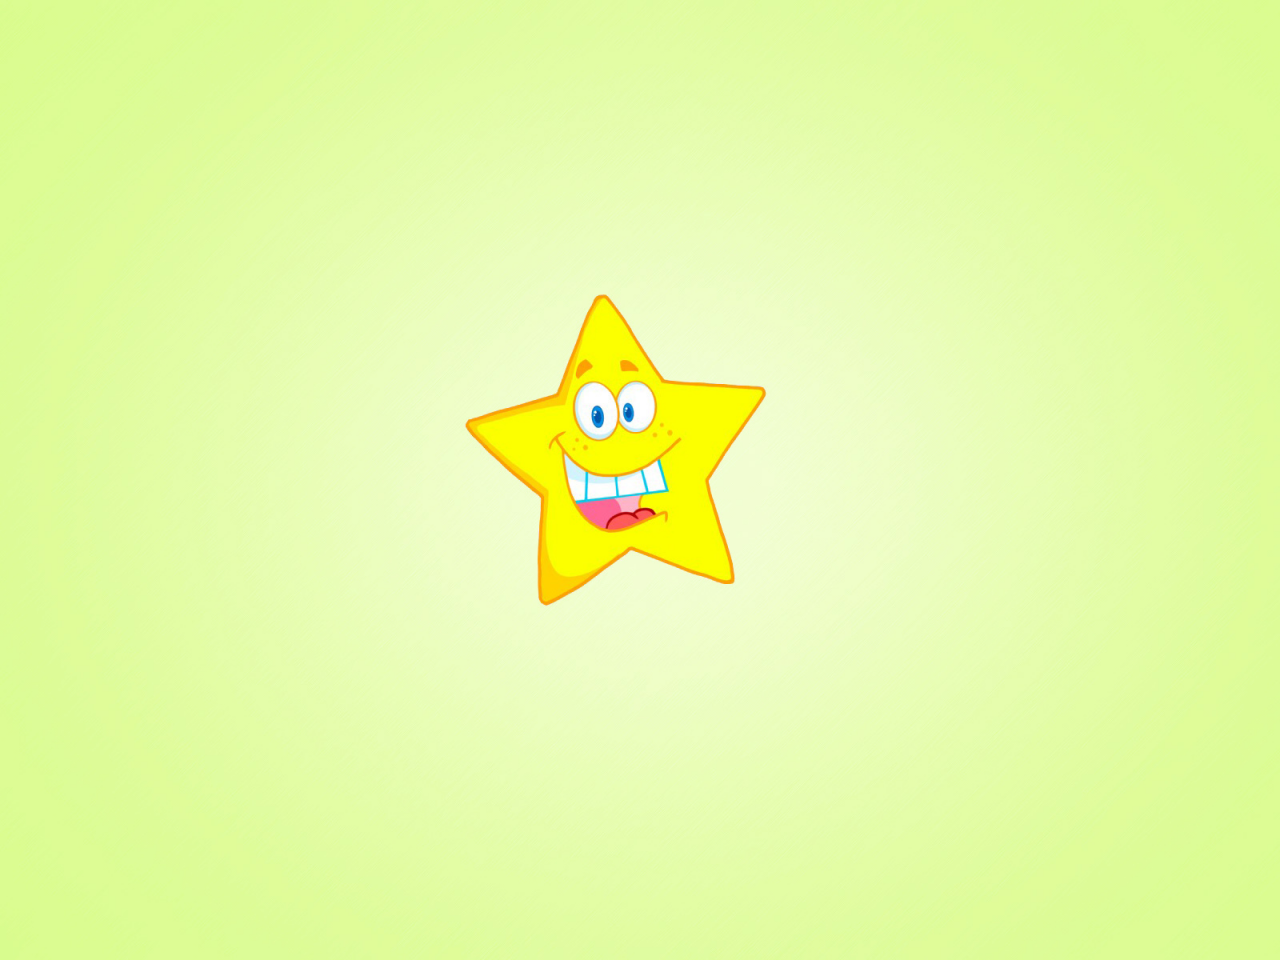 звезда, улыбка, желтая, светлый фон, минимализм